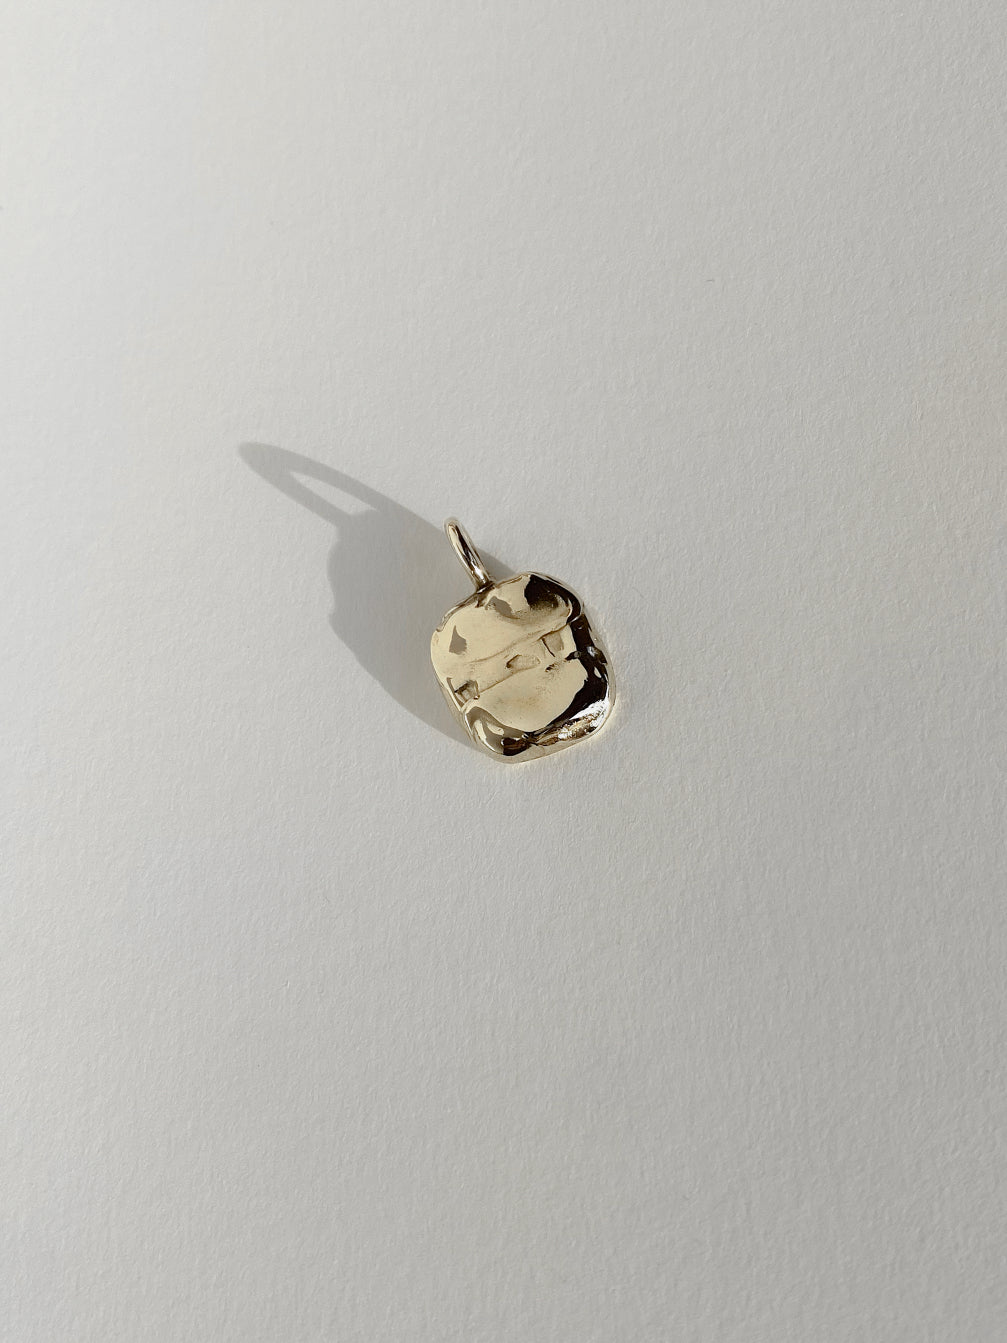 Textured gold molten pendant on white background